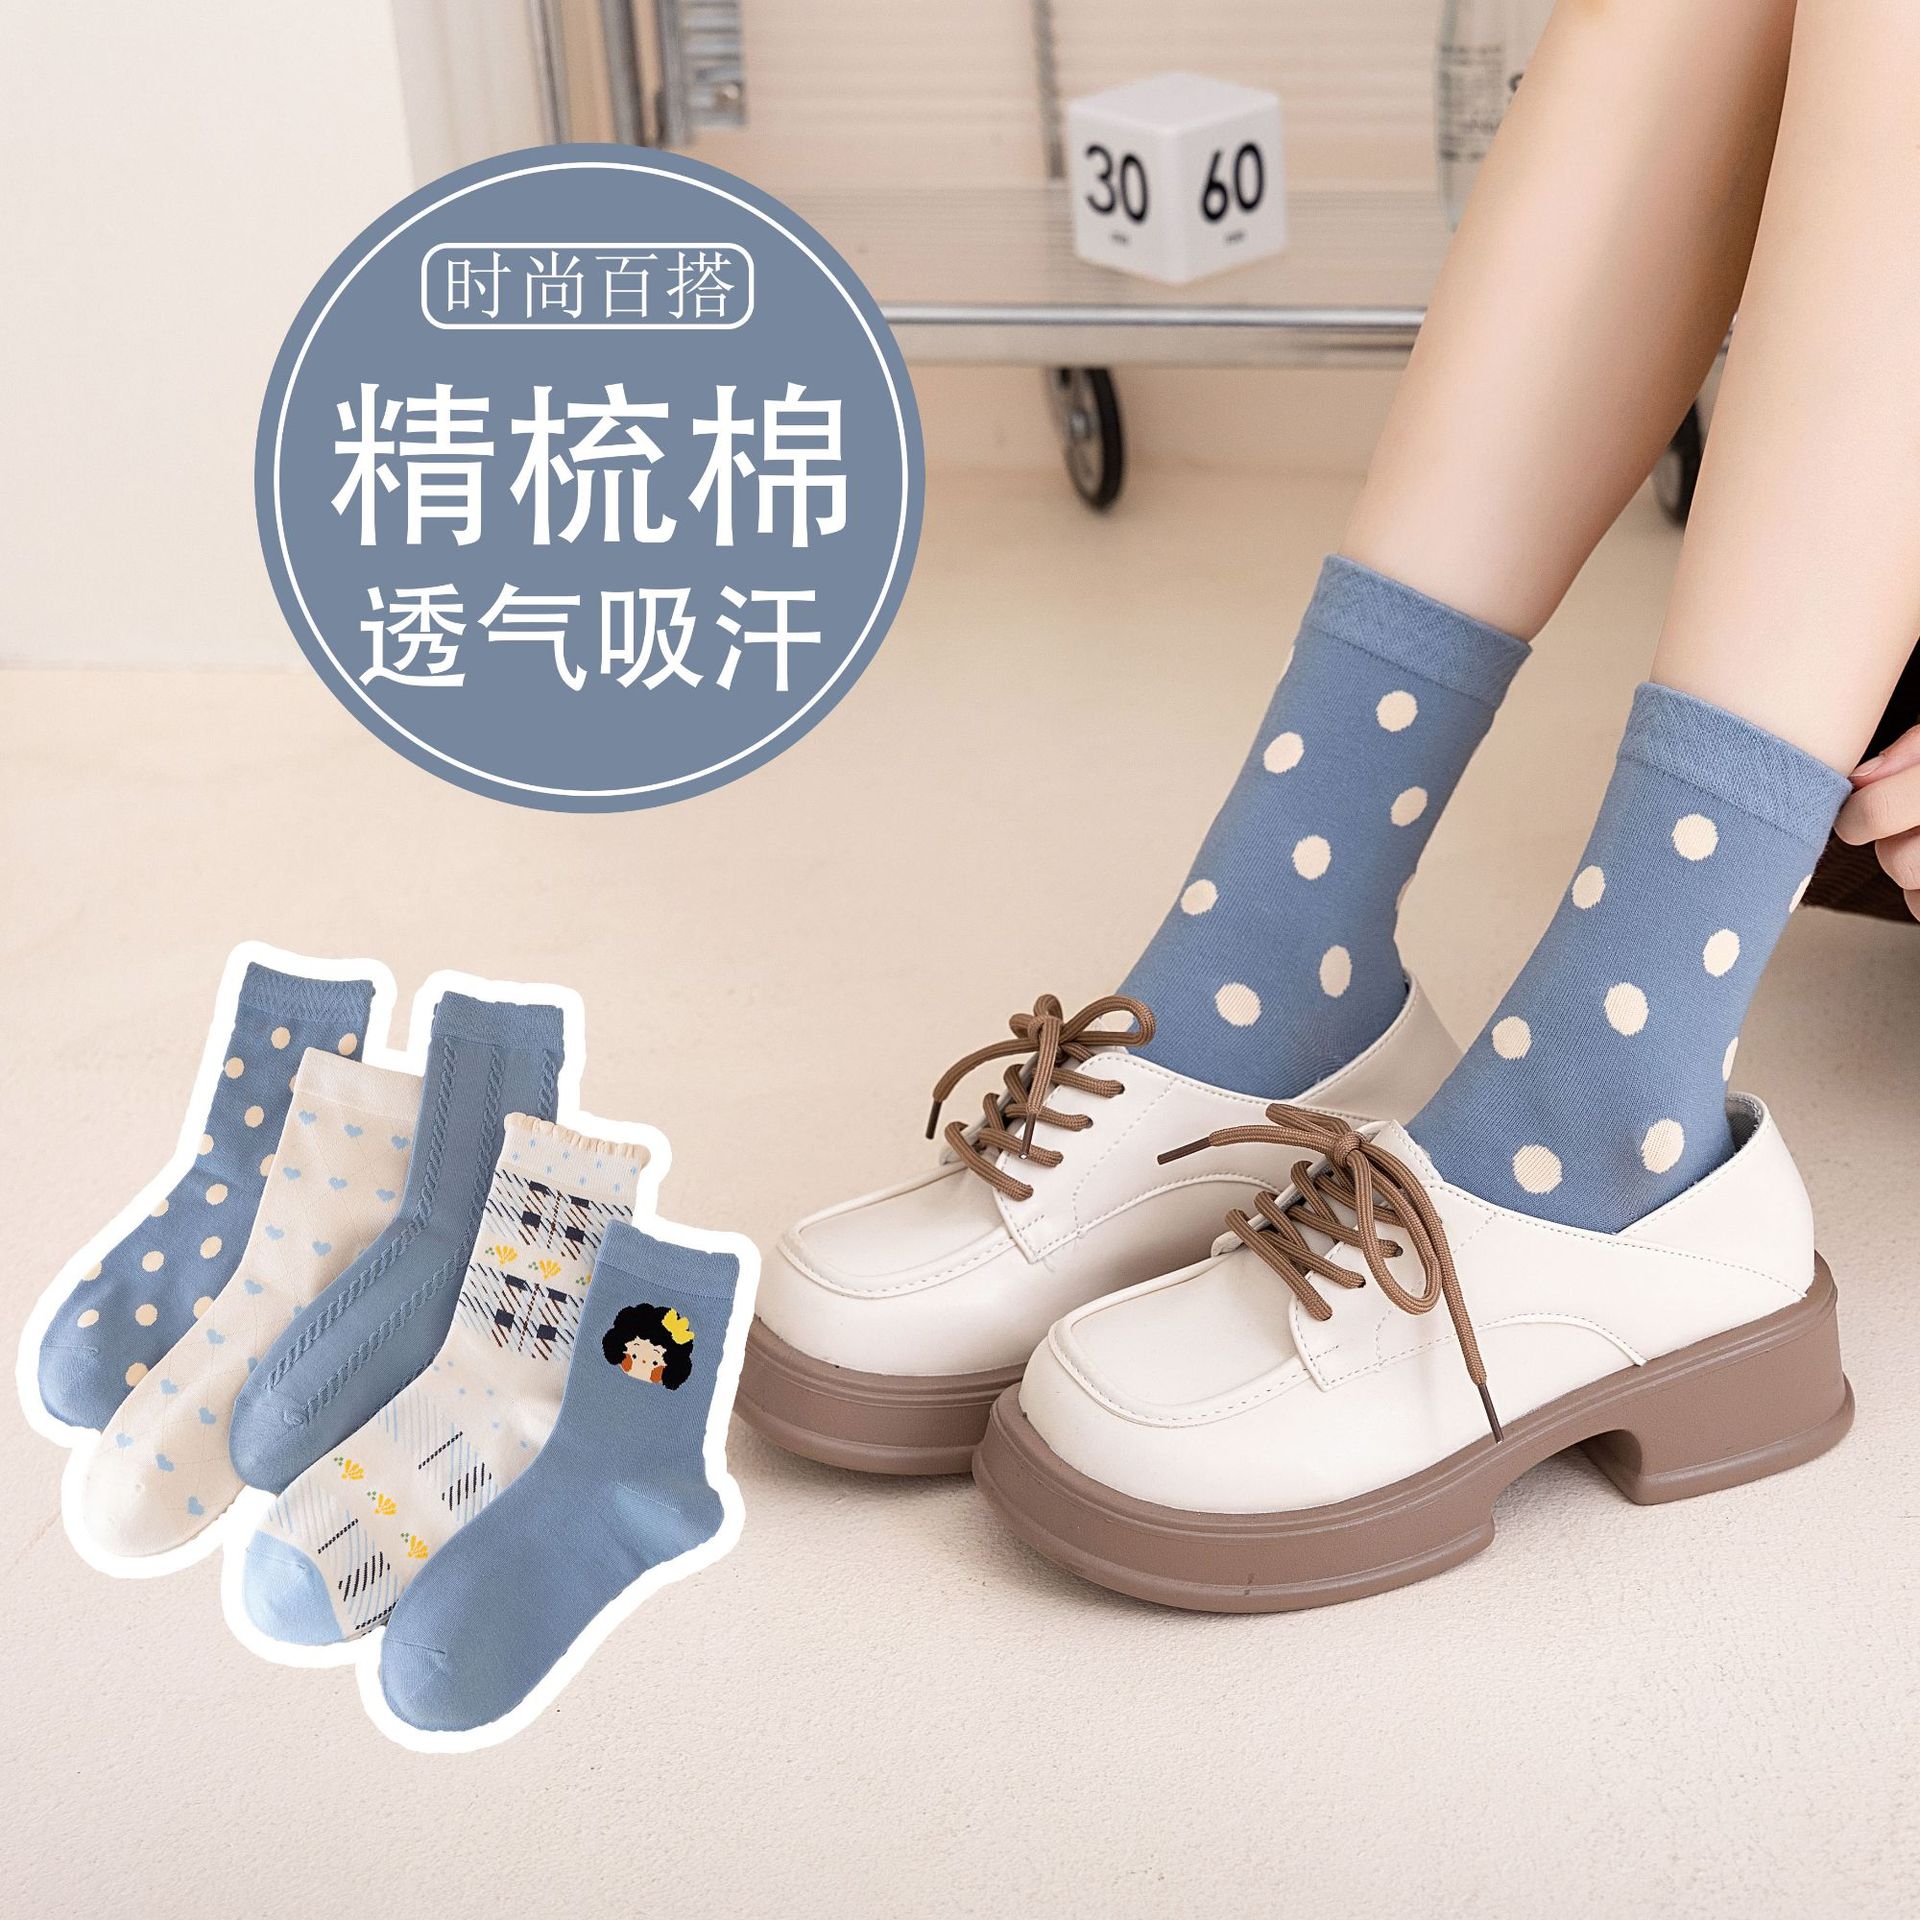 Spring New cute Japanese mid-calf socks combed cotton high elastic breathable women's socks dopamine color student socks